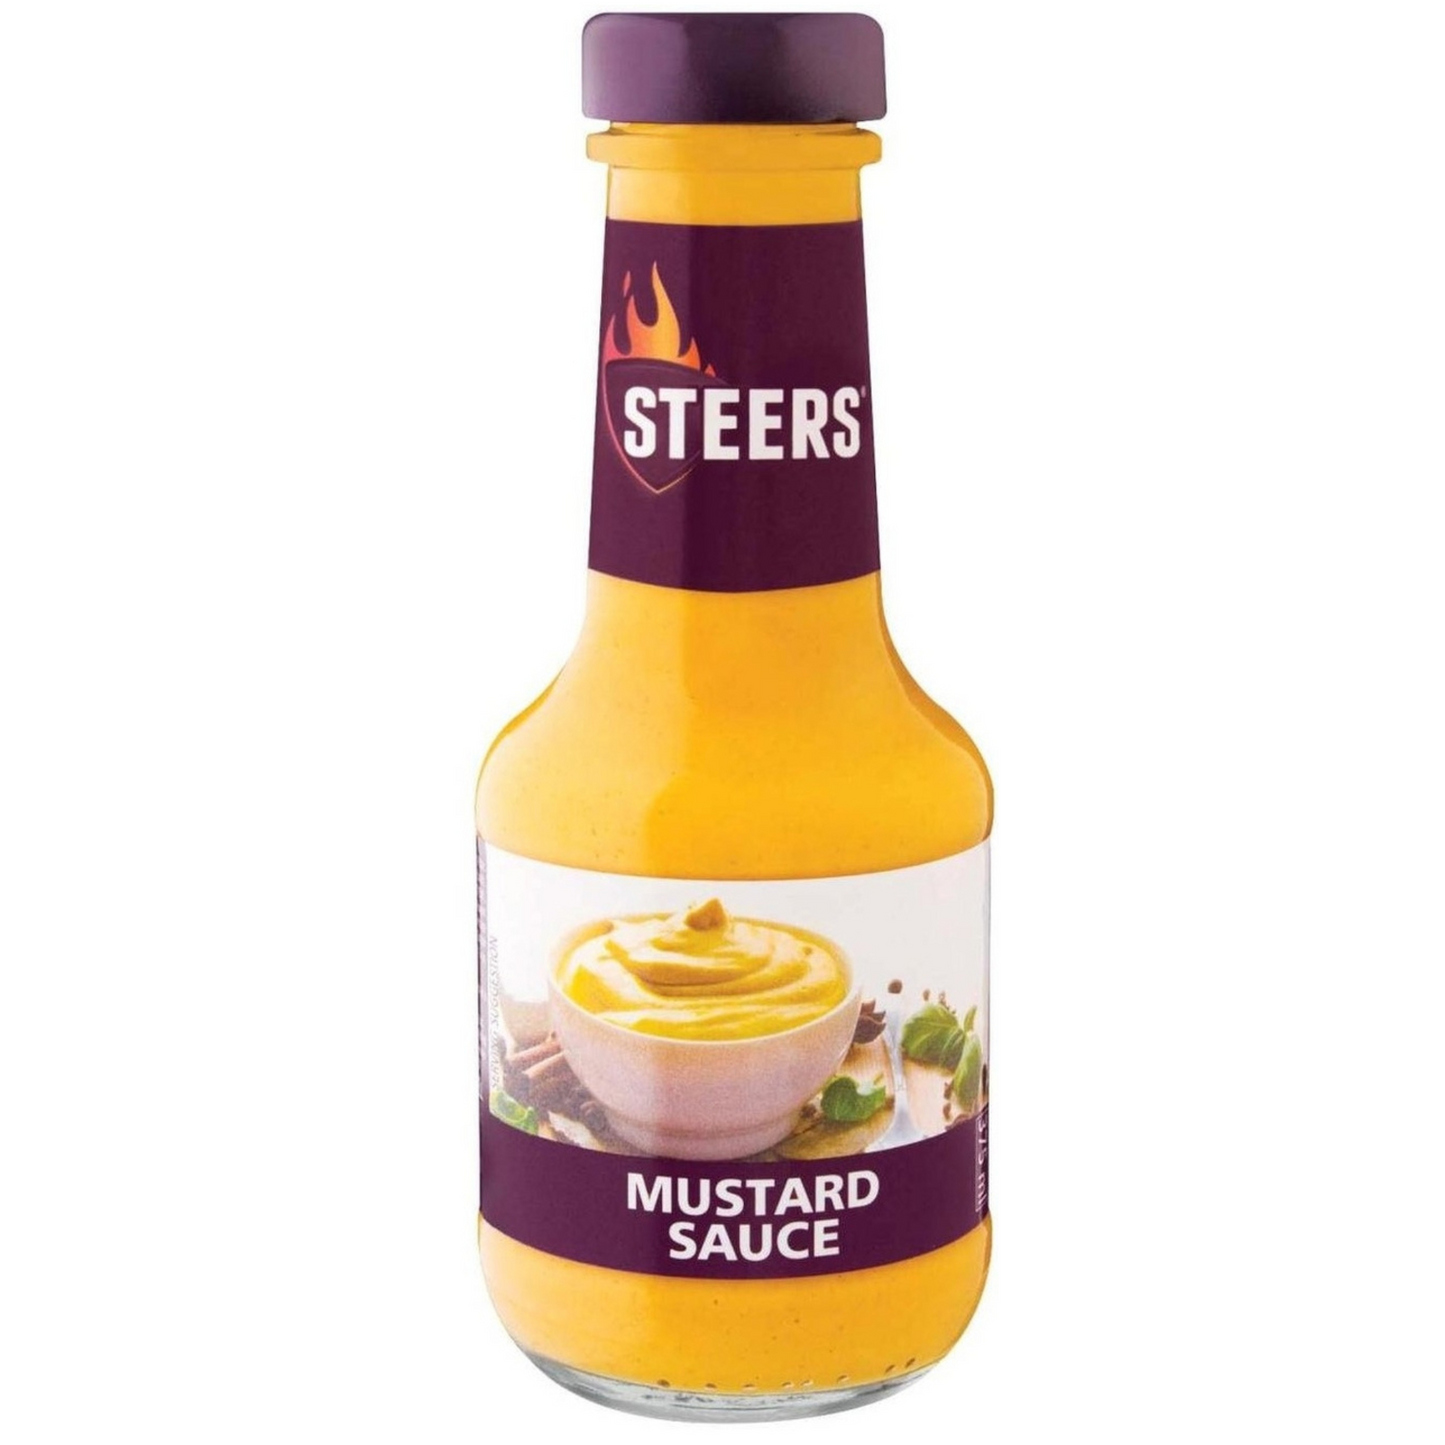 Steers Mustard Sauce